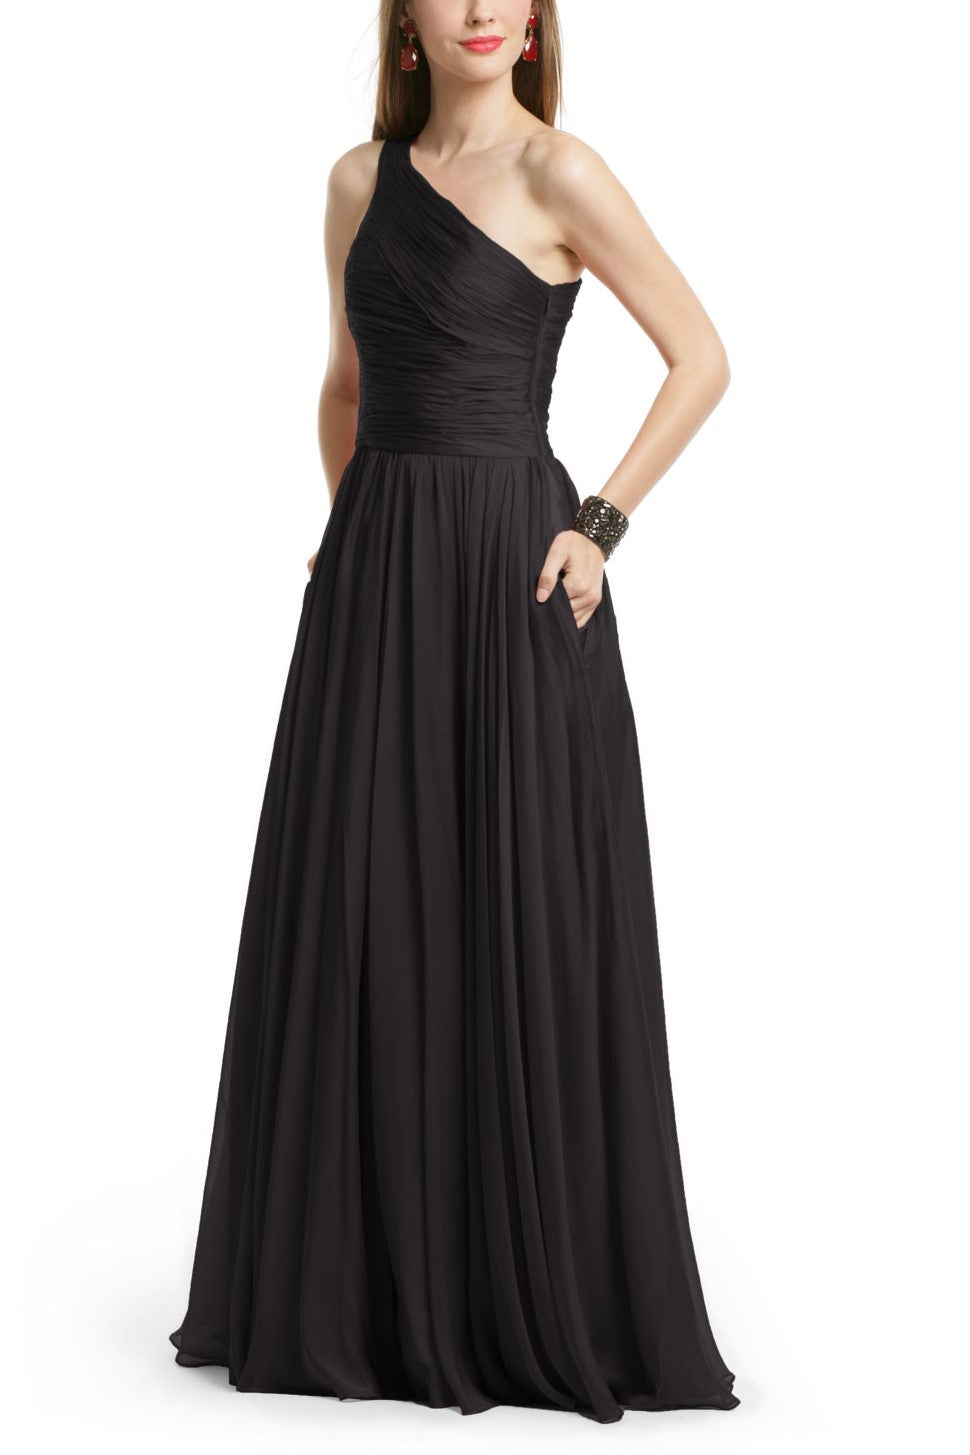 one-shoulder-floor-length-black-prom-dress-chiffon-skirt